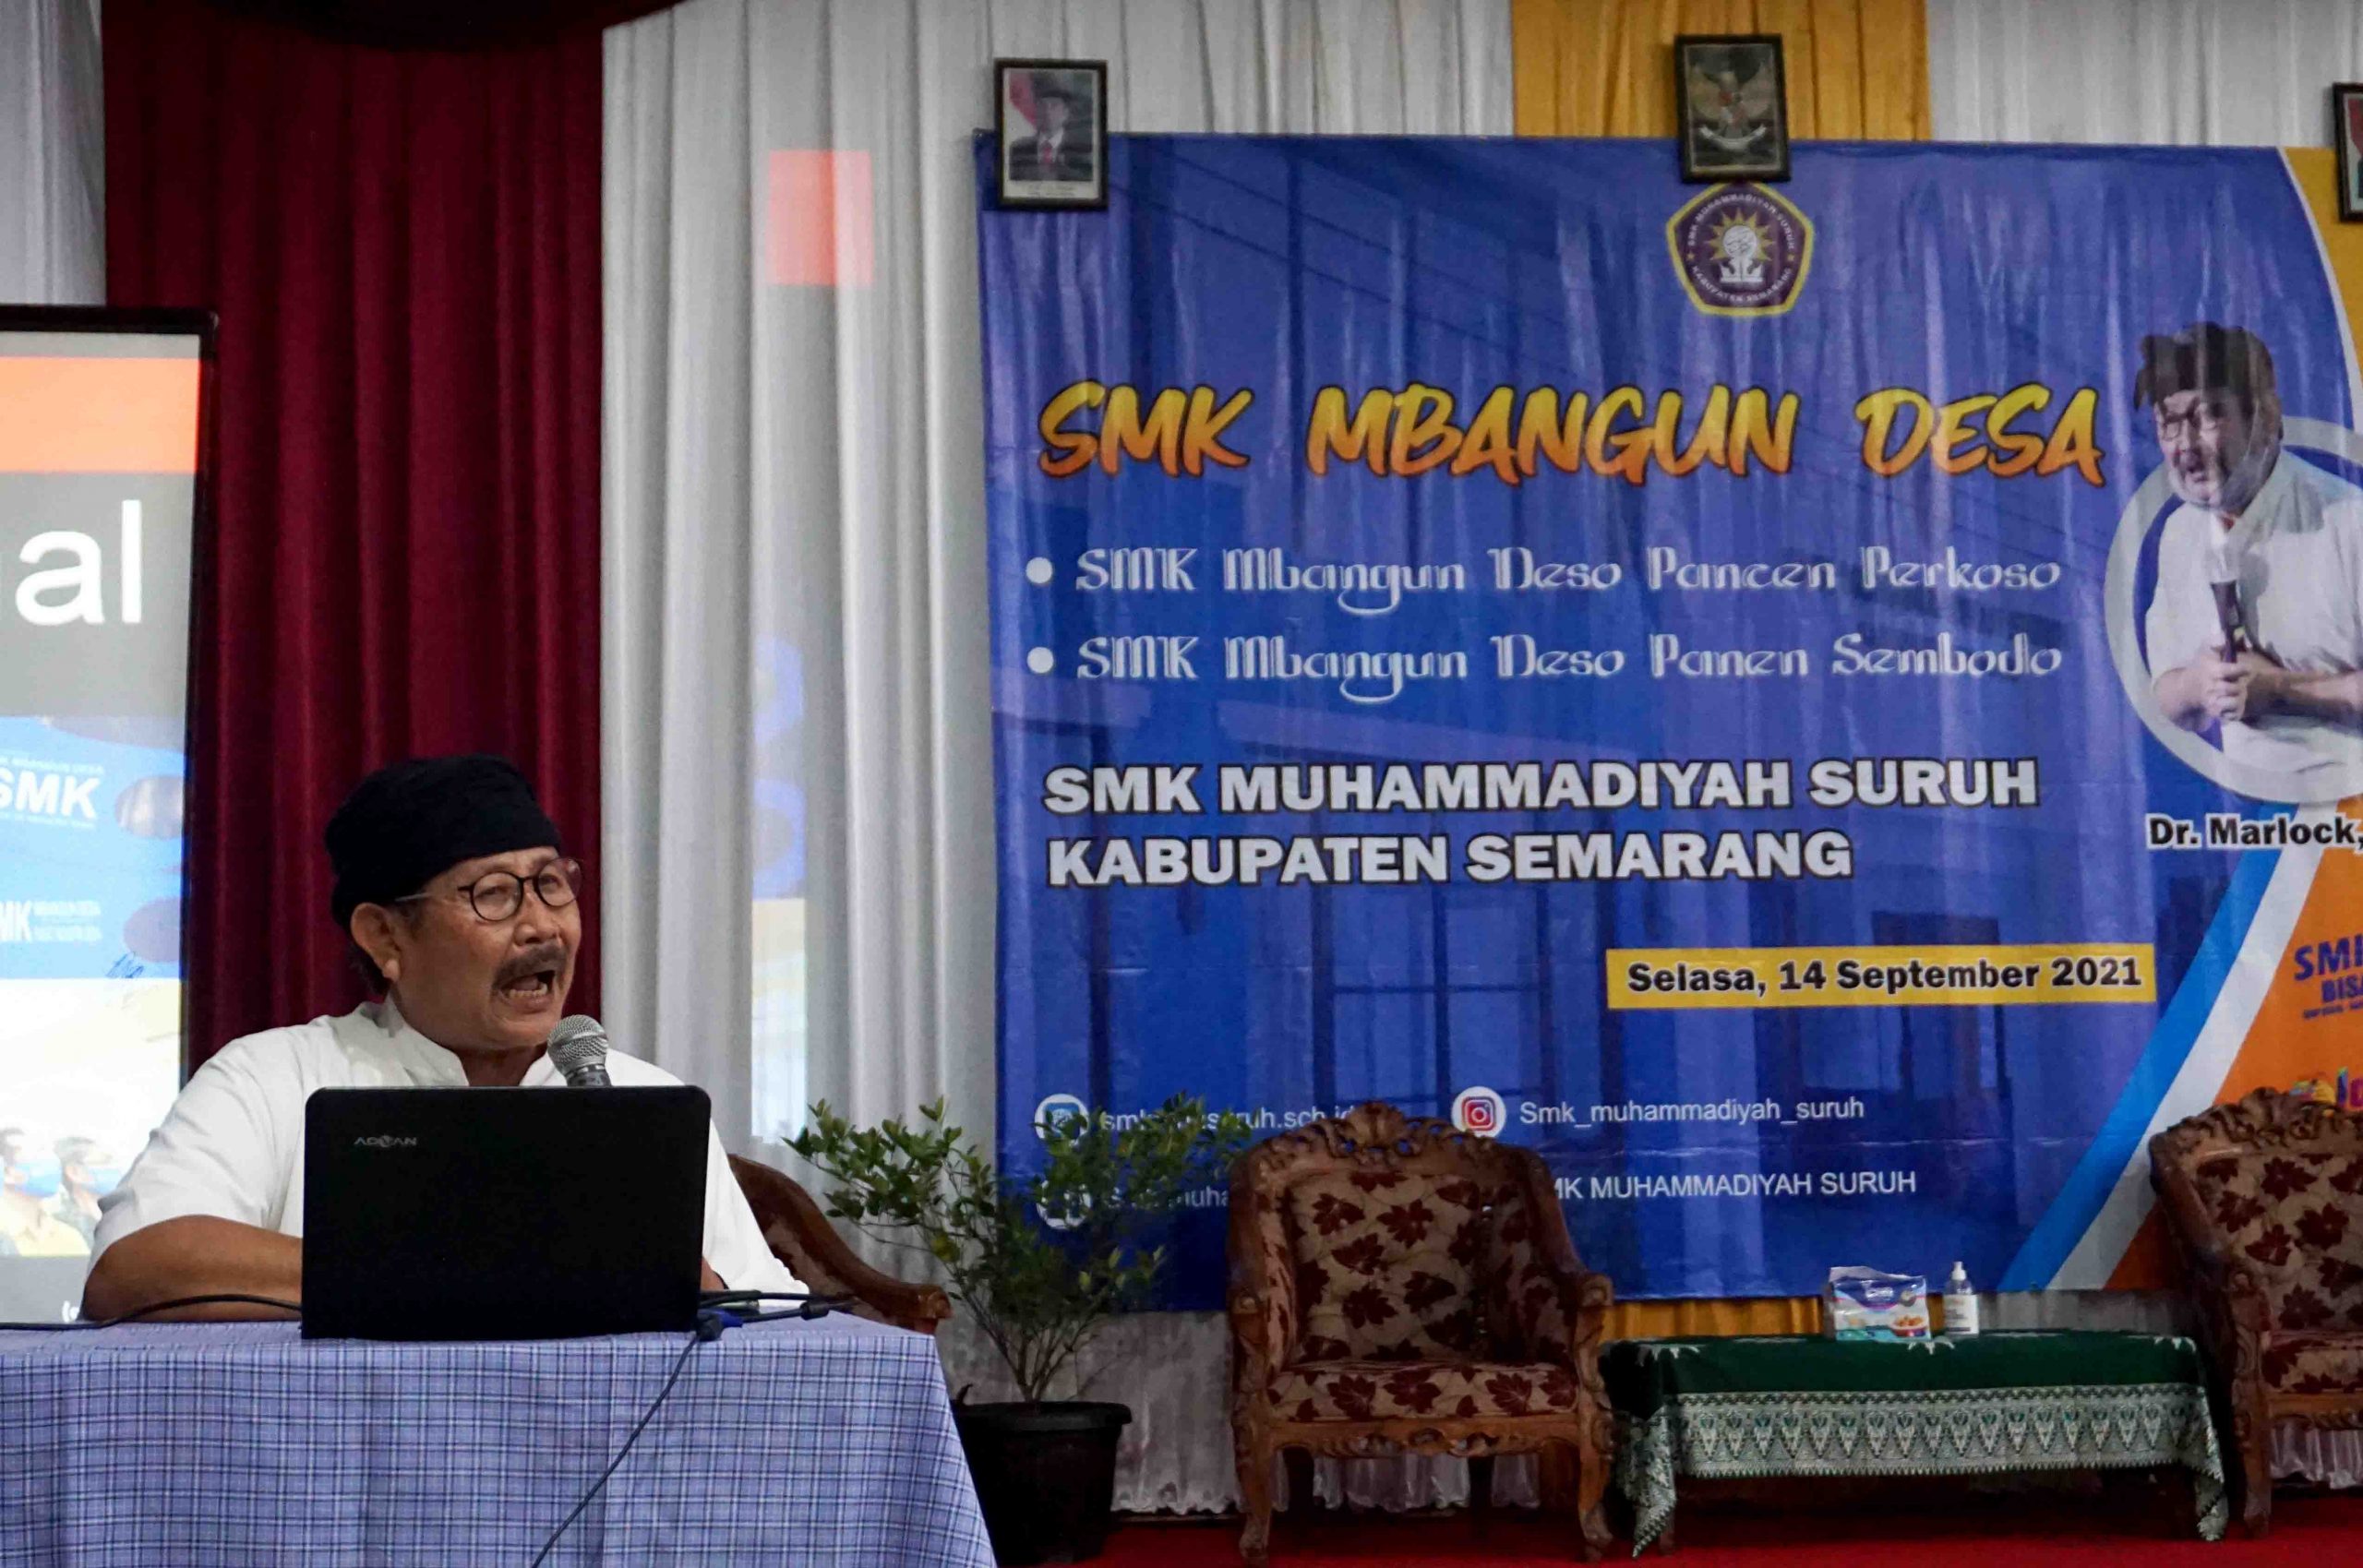 Gus Marlock tebarkan "Virus" SMK Mbangun Desa di SMK Muhammadiyah Suruh